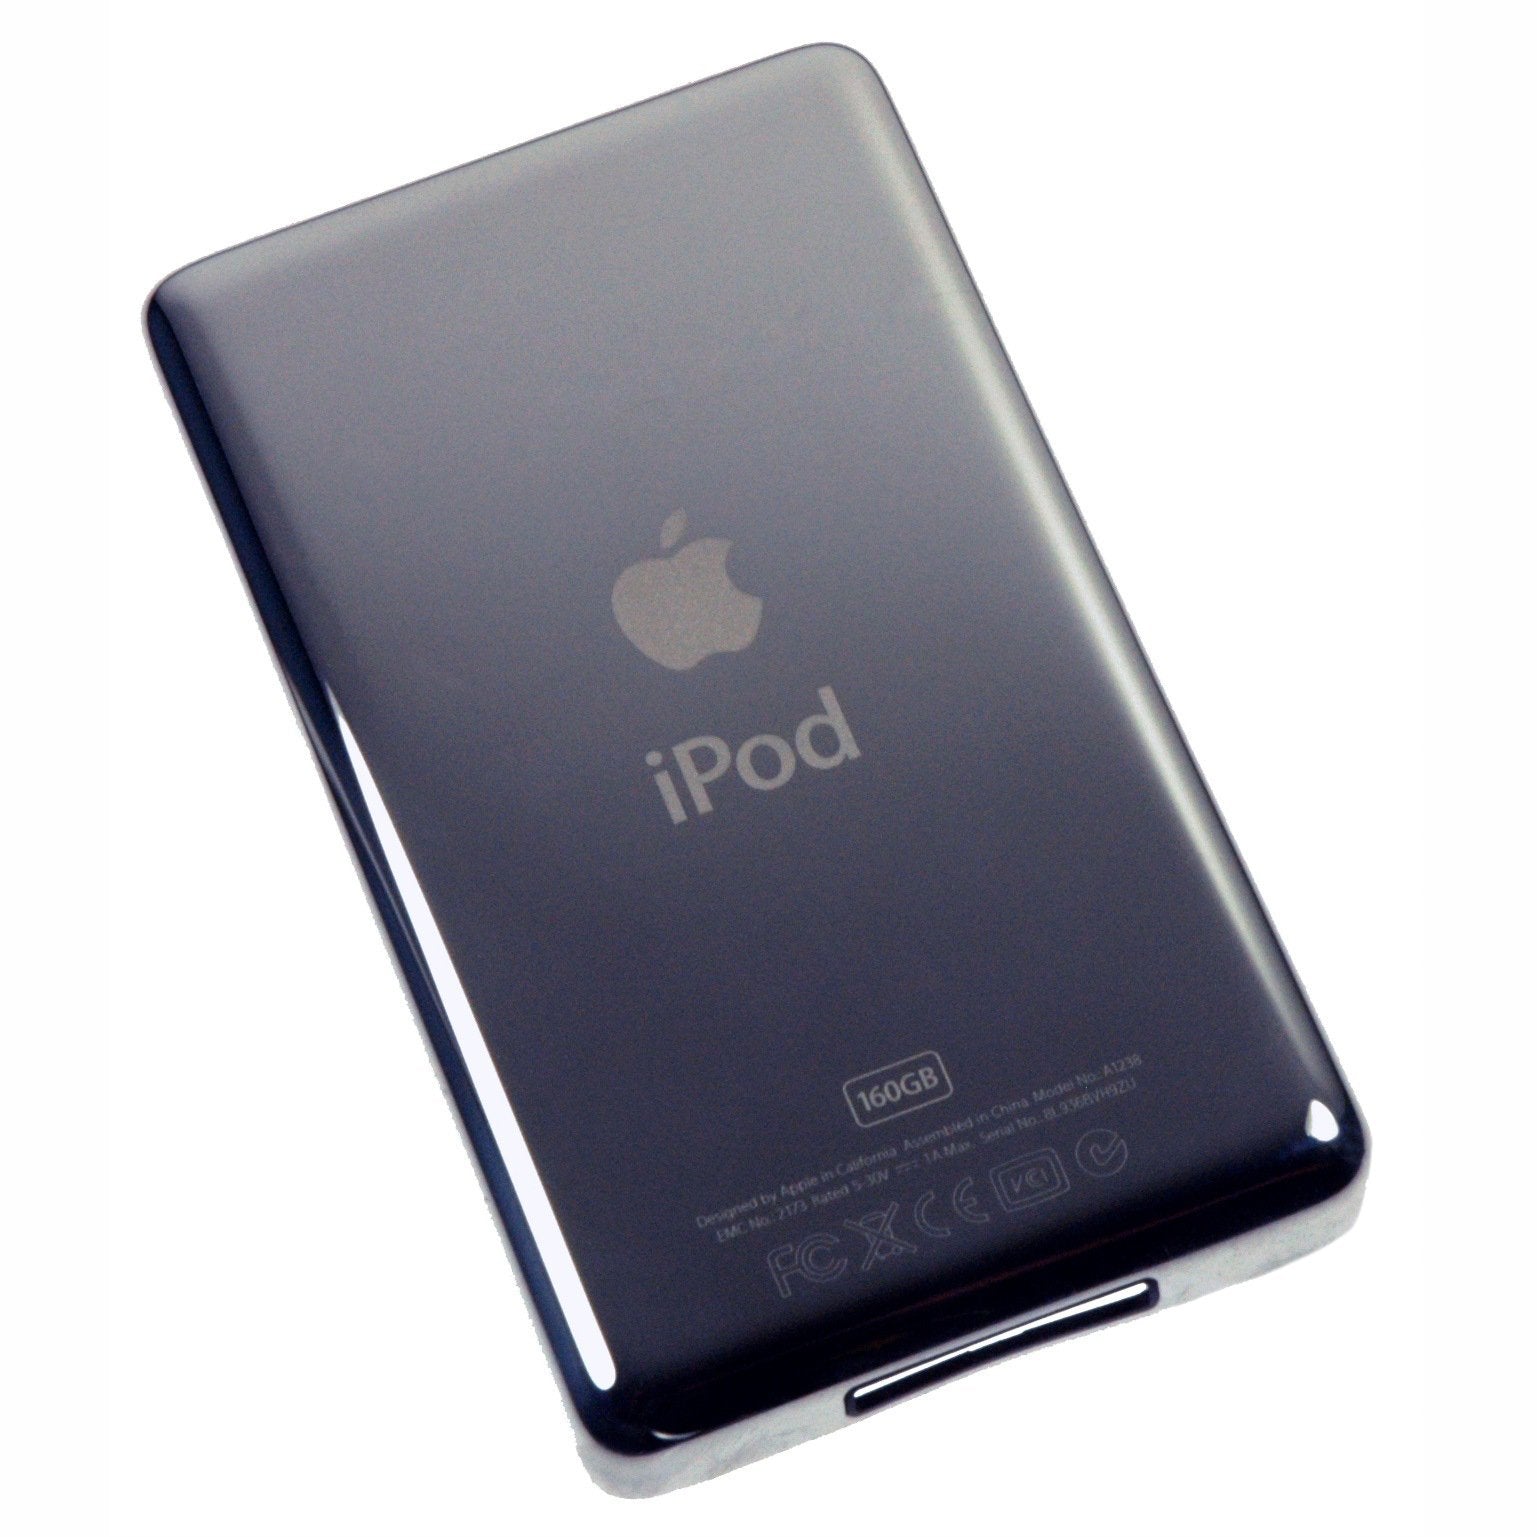 iPod Classic Thin Rear Panel Used 160GB Capacity Label